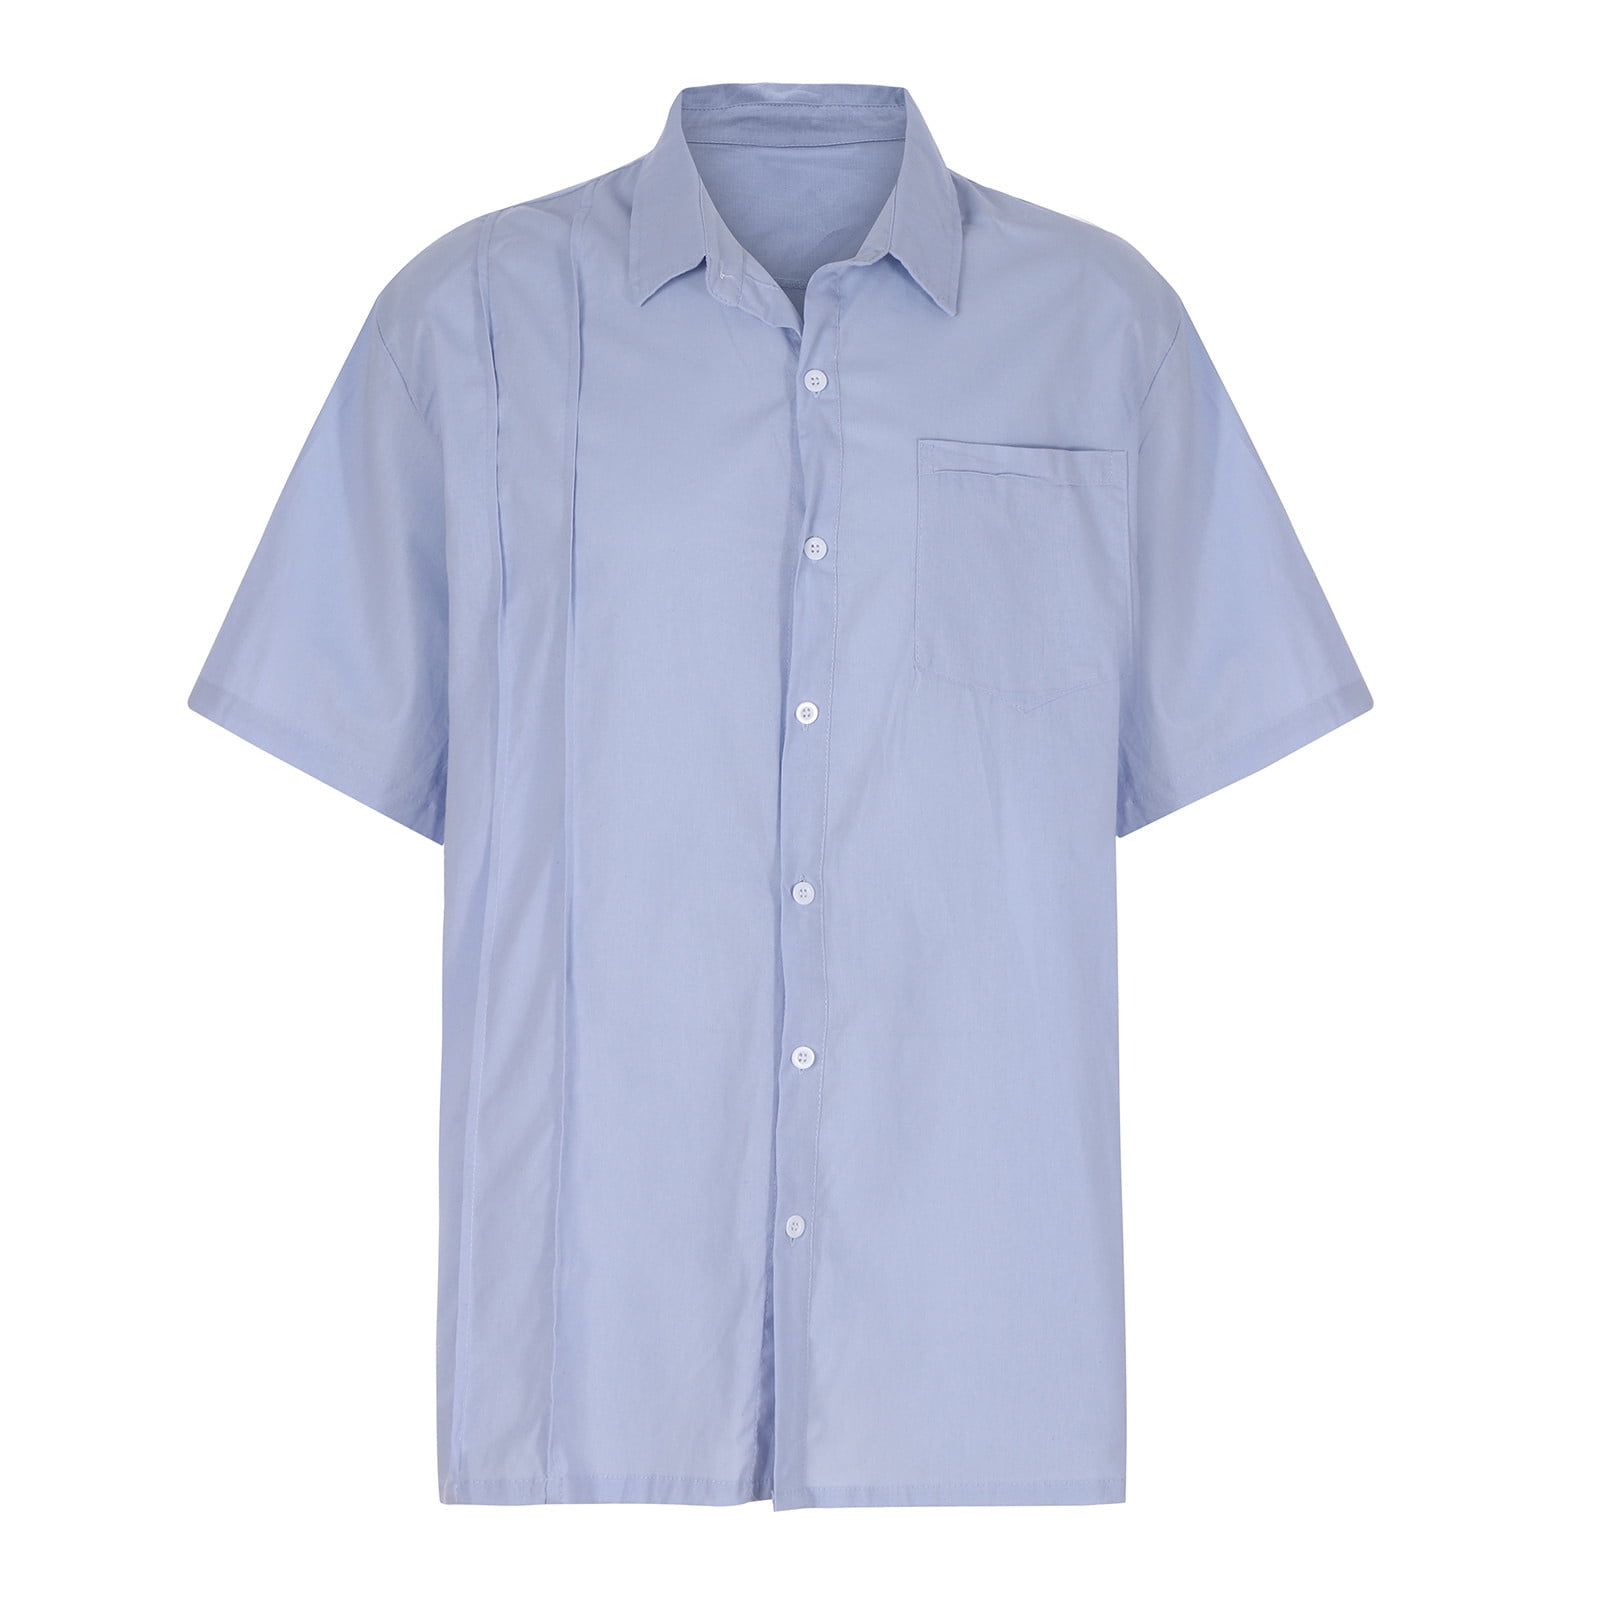 LYXSSBYX Long Sleeve T Shirts for Men Clearance Men's Button Trend ...